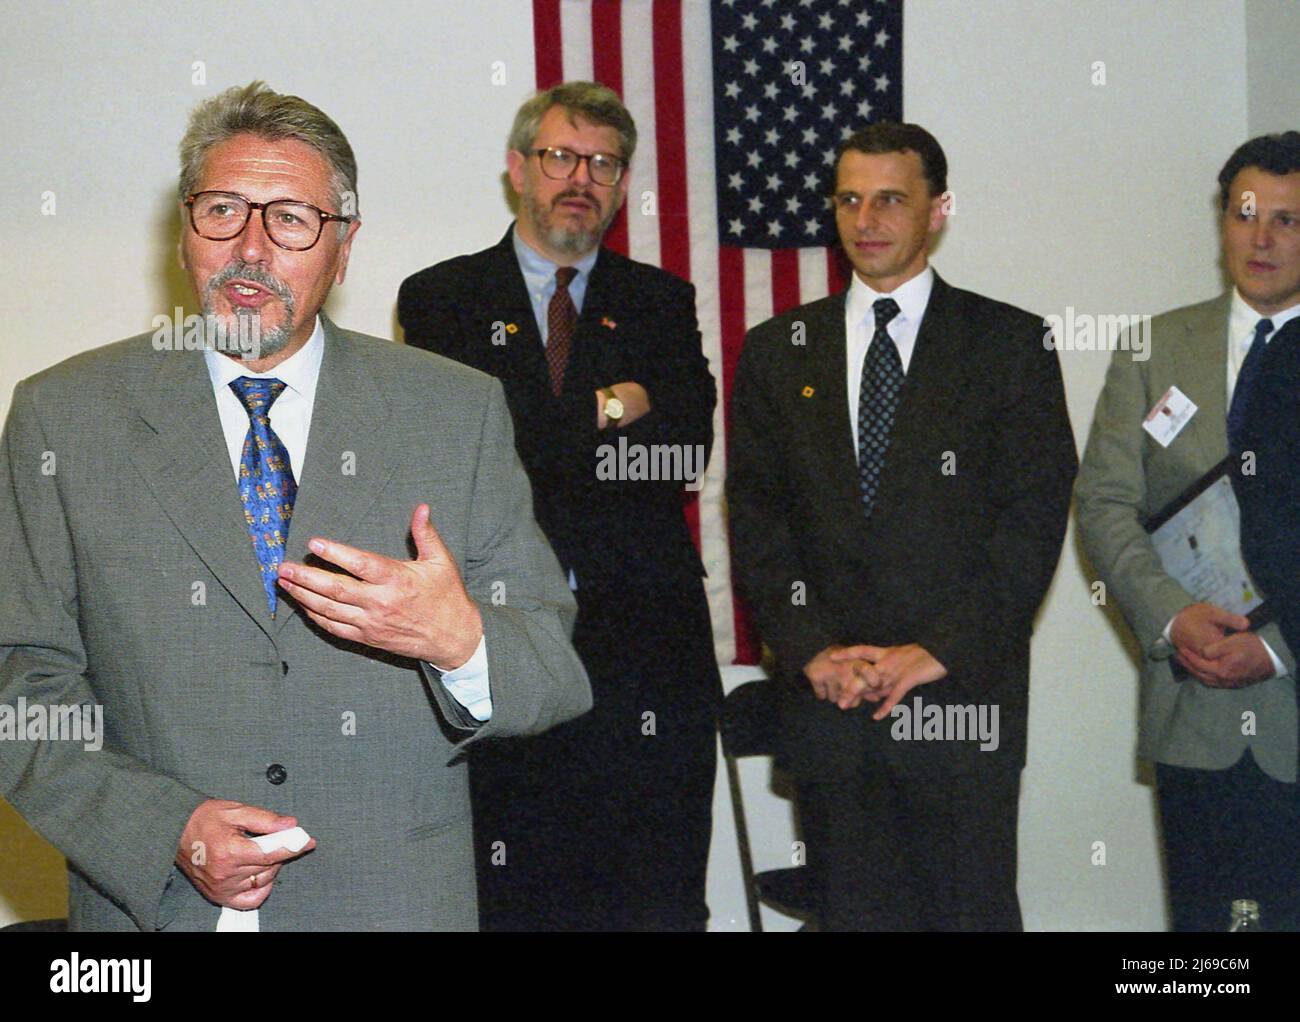 Romanian  president Emil Constantinescu in San Francisco, CA, USA, 1998. In the back, the U.S. ambassador in Romania James Rosapepe & the Romanian ambassador in the U.S. Mircea Geoana. Stock Photo